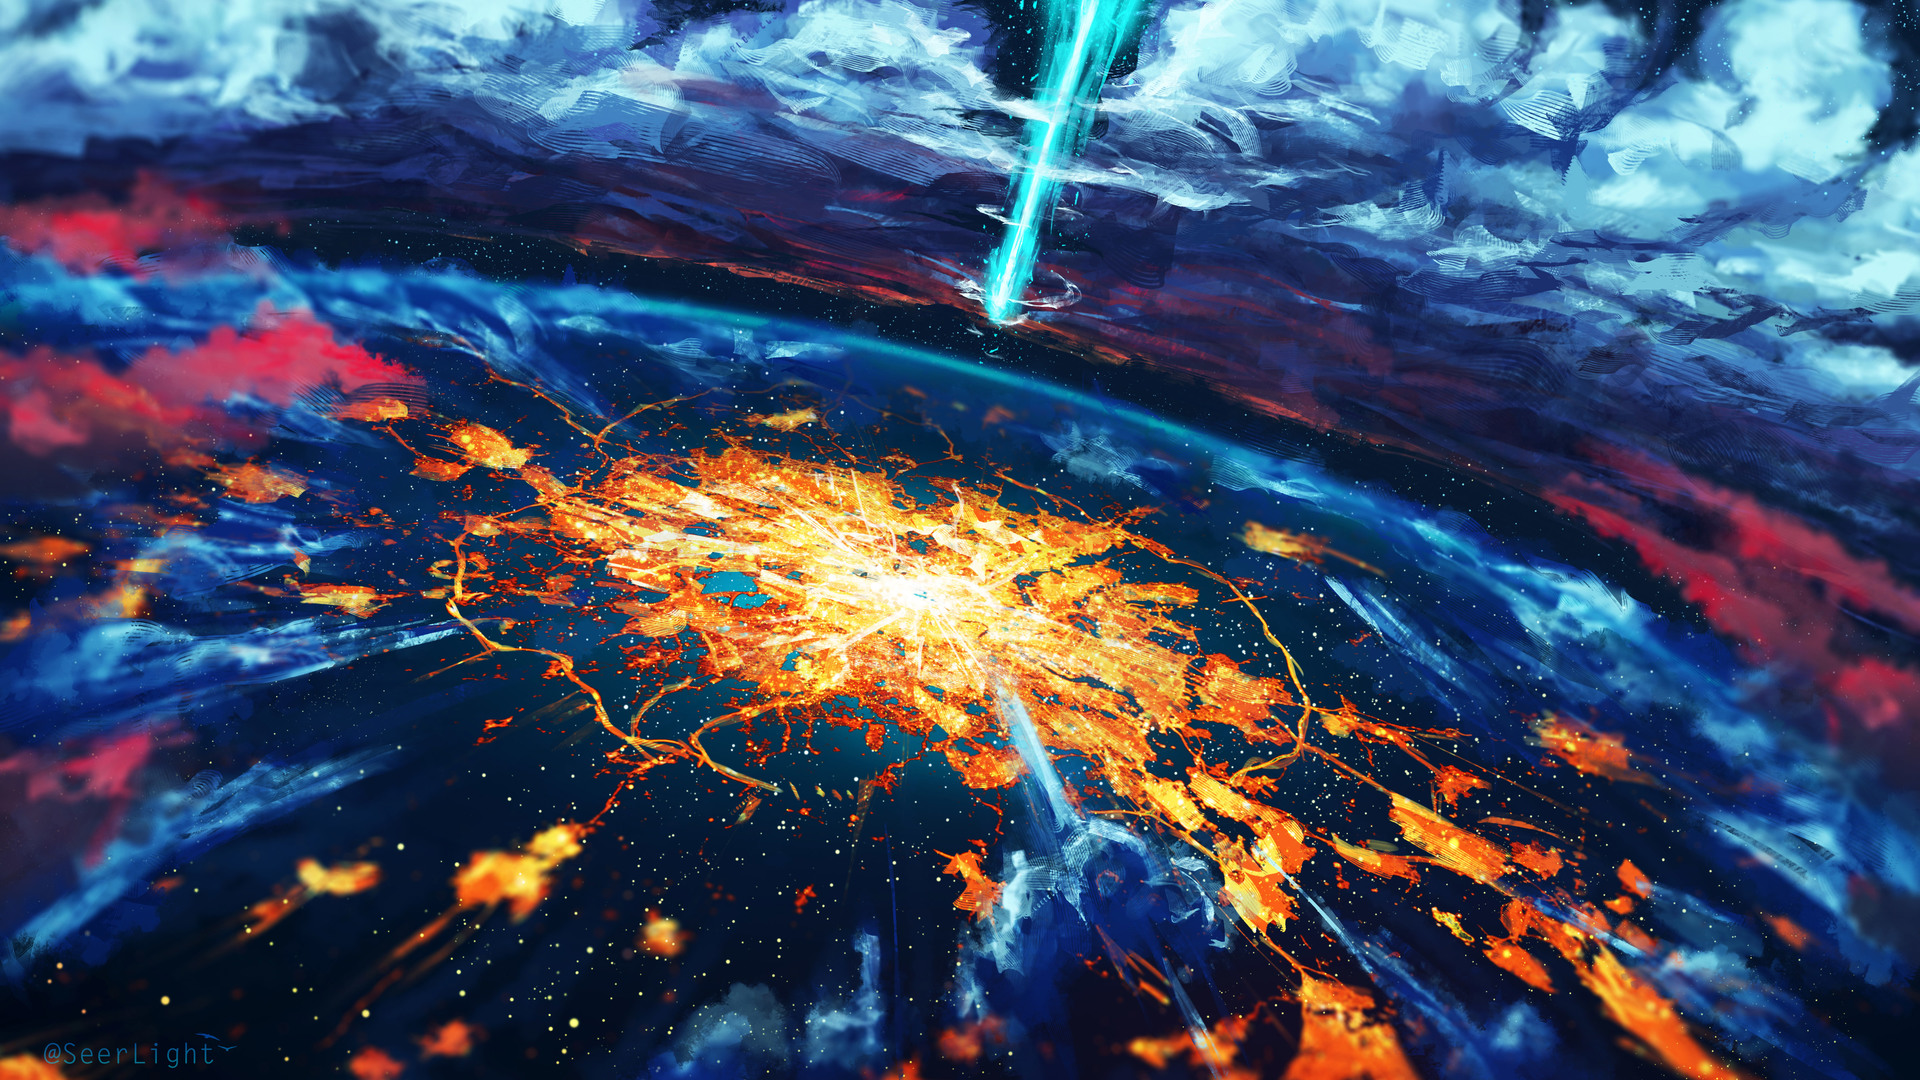 General 1920x1080 artwork fantasy art digital art meteors planet space blue orange